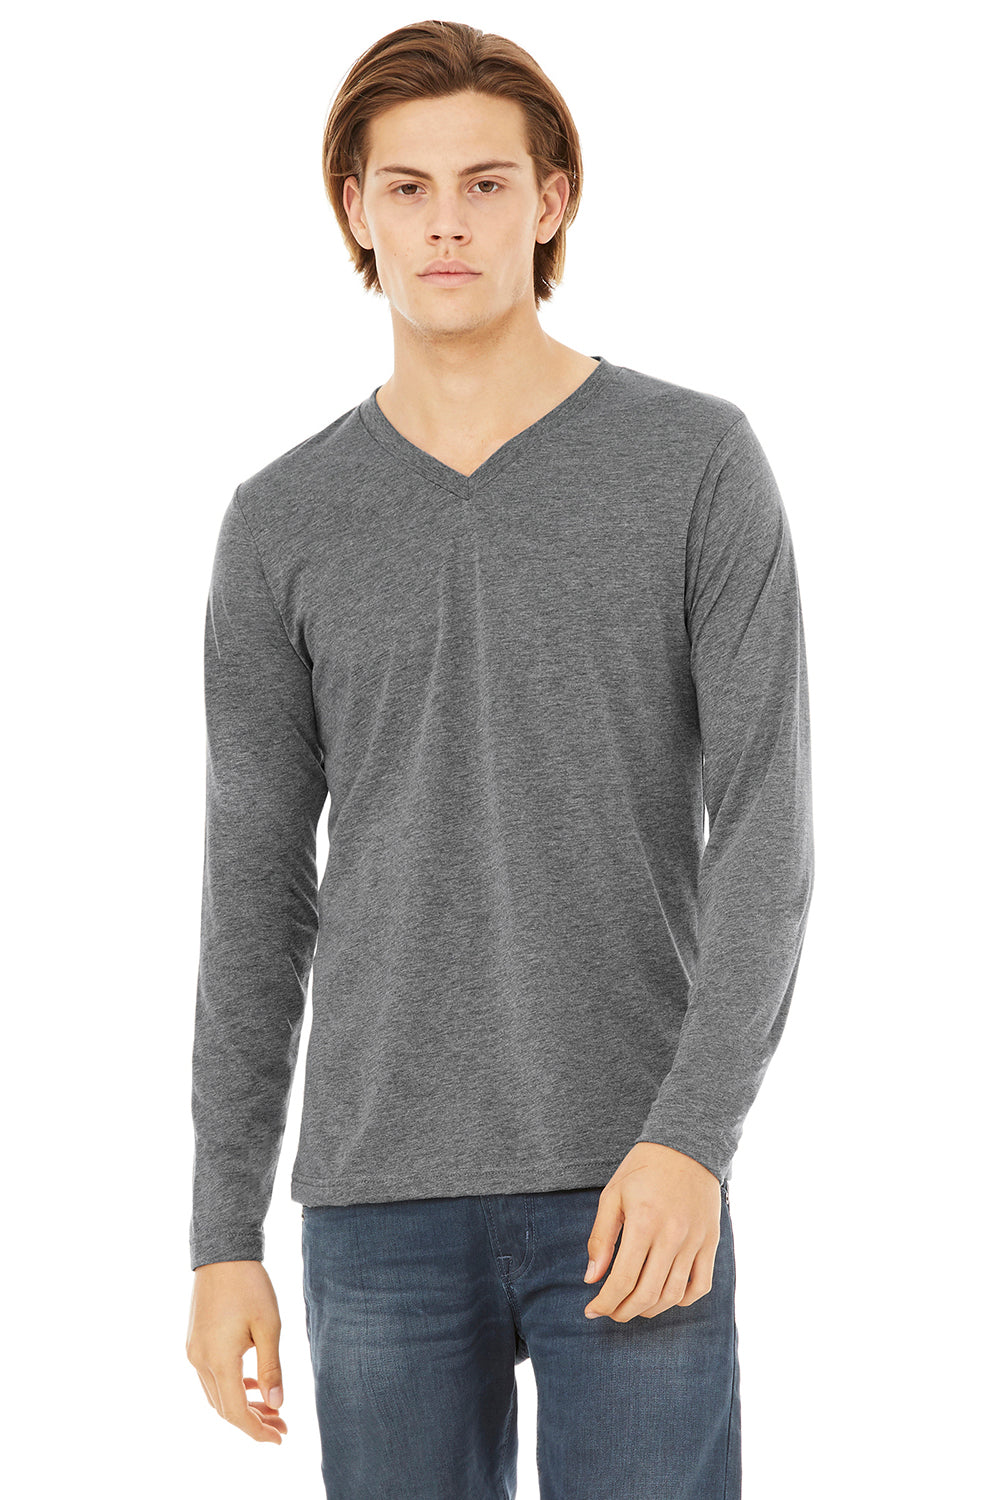 Bella + Canvas 3425 Mens Jersey Long Sleeve V-Neck T-Shirt Grey Front